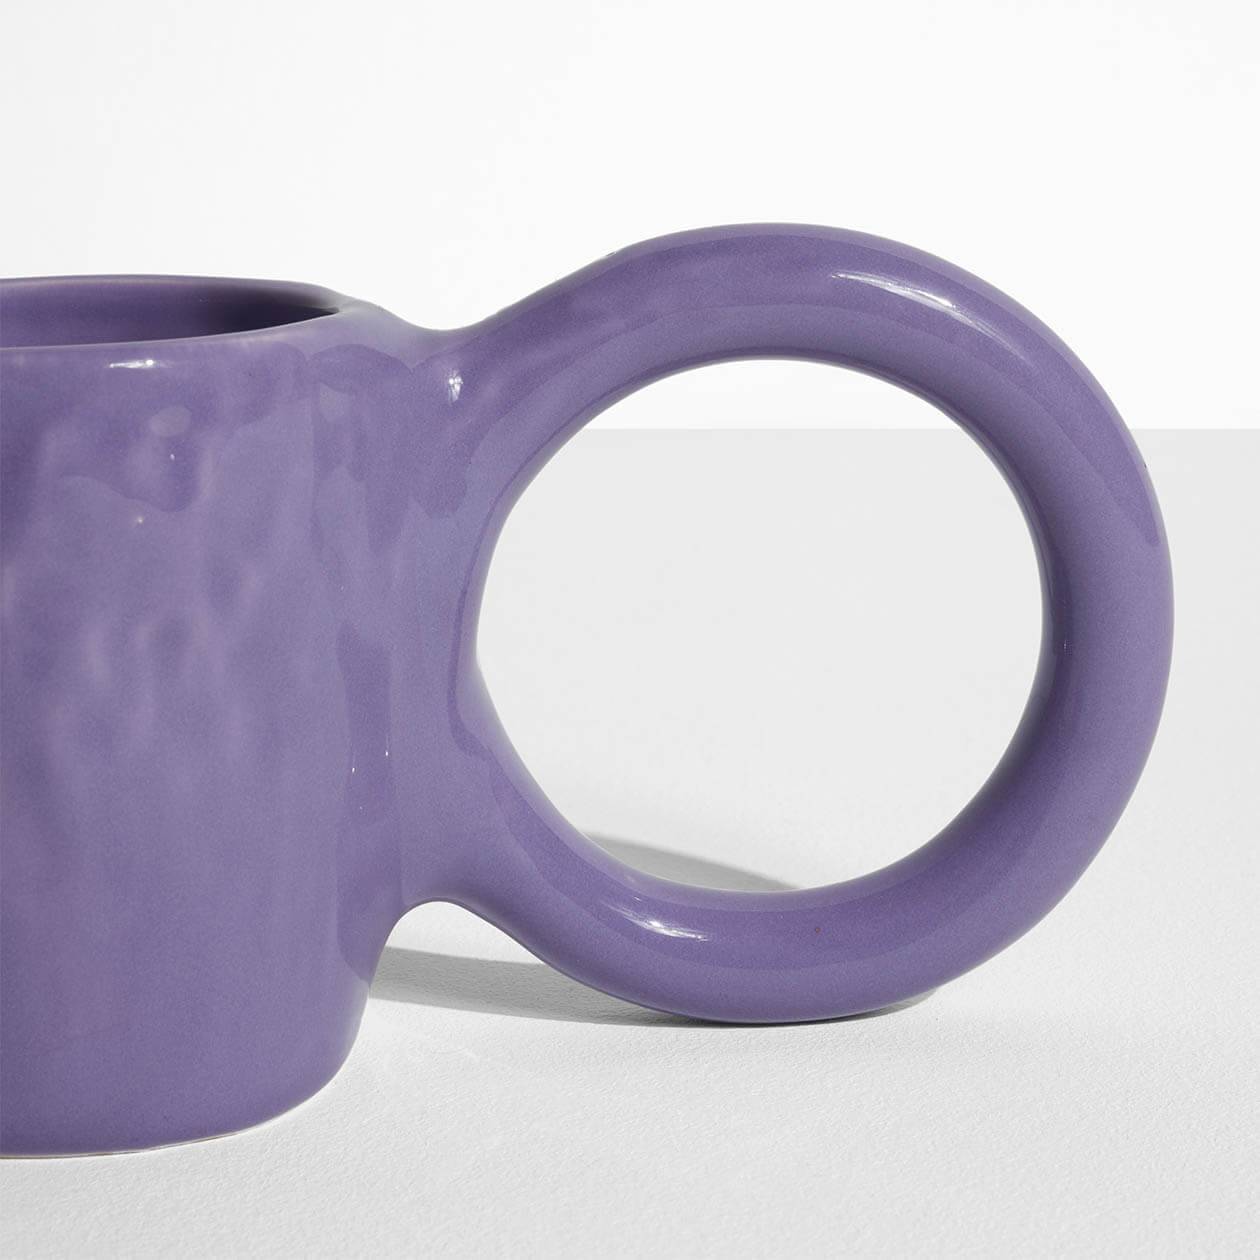 Donut design mug - Blueberry - details - Petite Friture